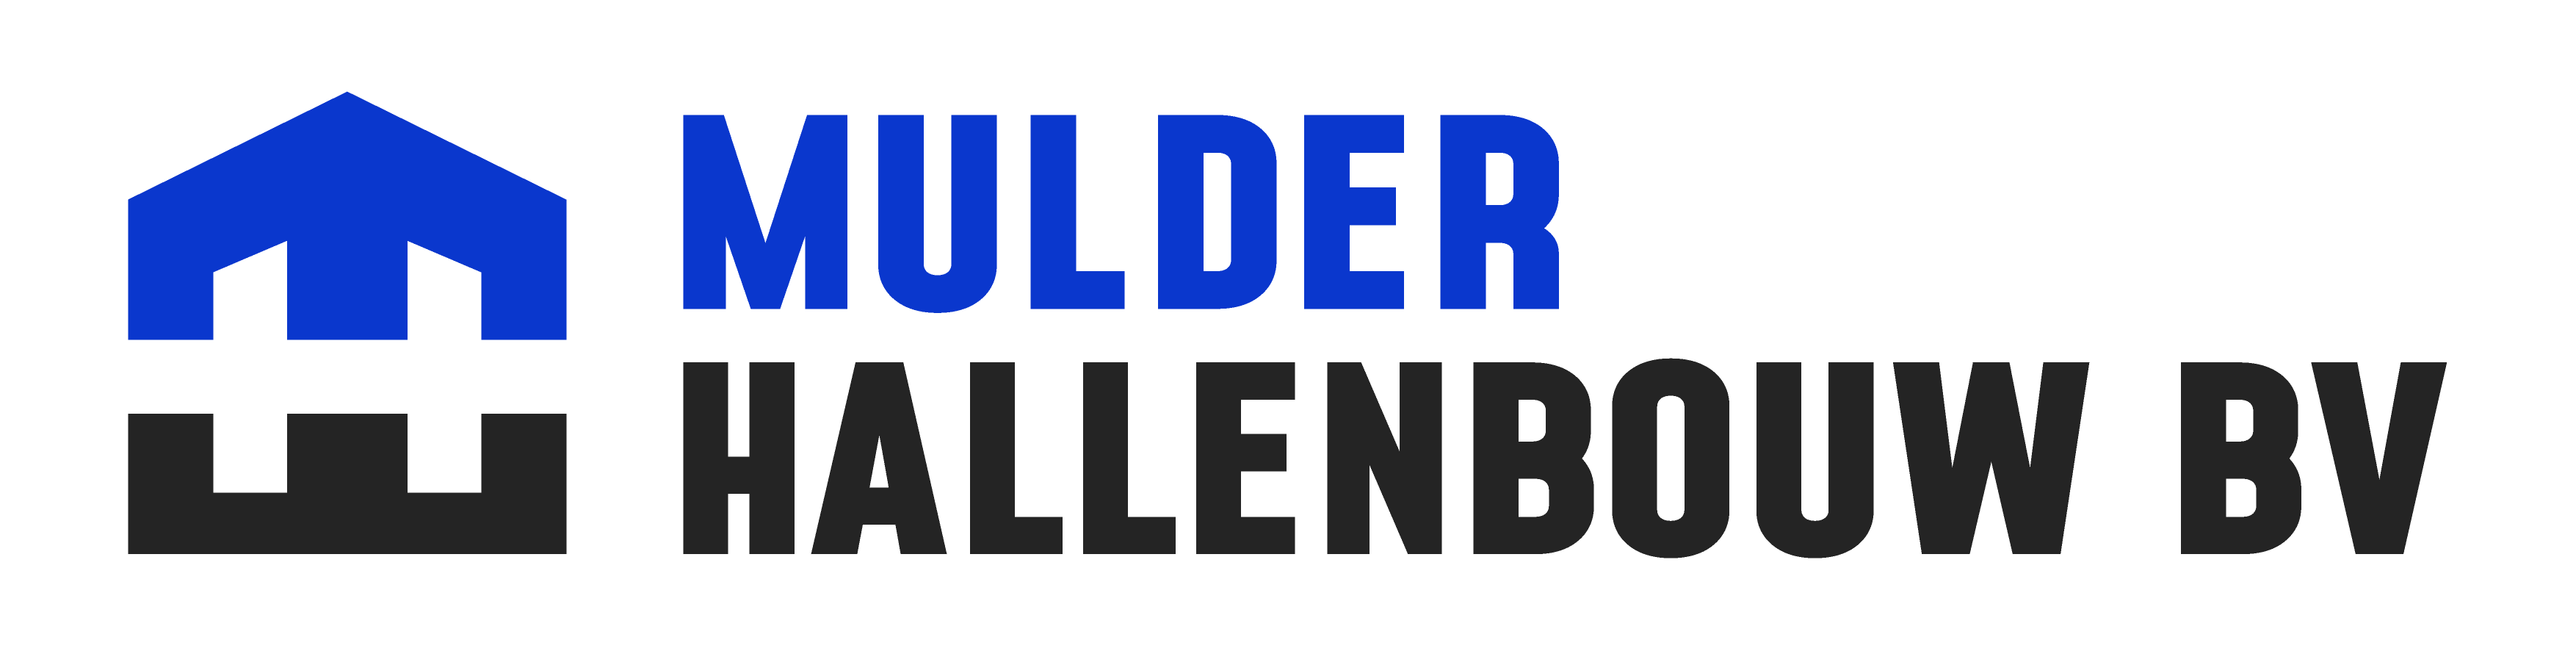 Mulder Hallenbouw Logo